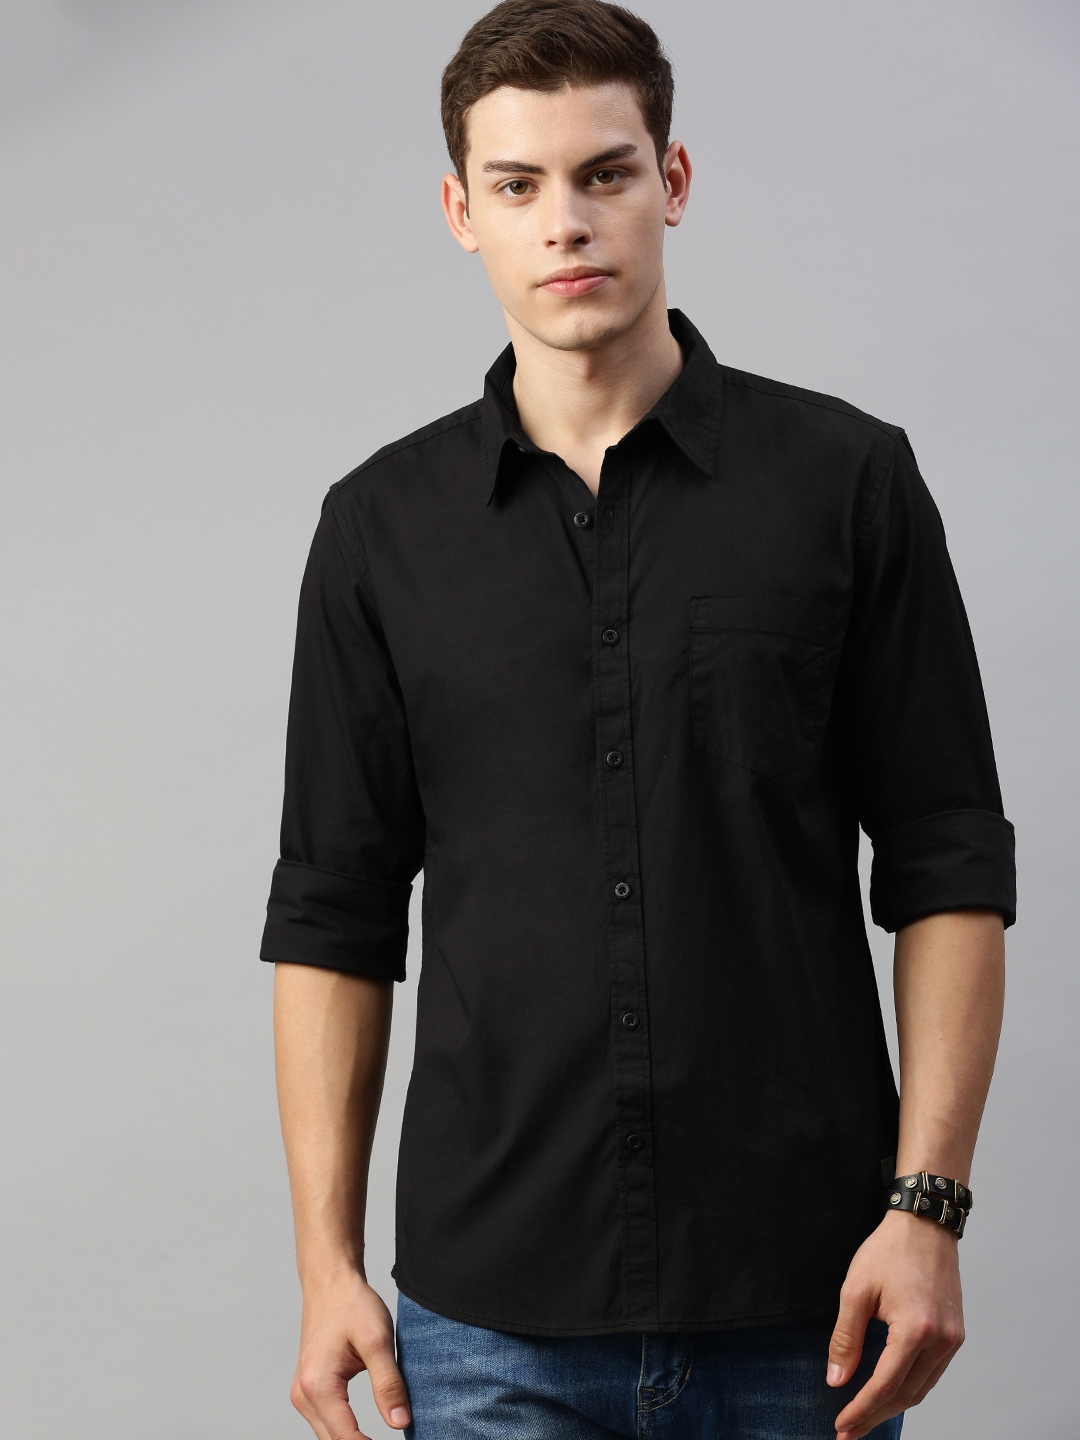 Buy Roadster Men Black Regular Fit Solid Casual Shirt - Shirts for Men ...